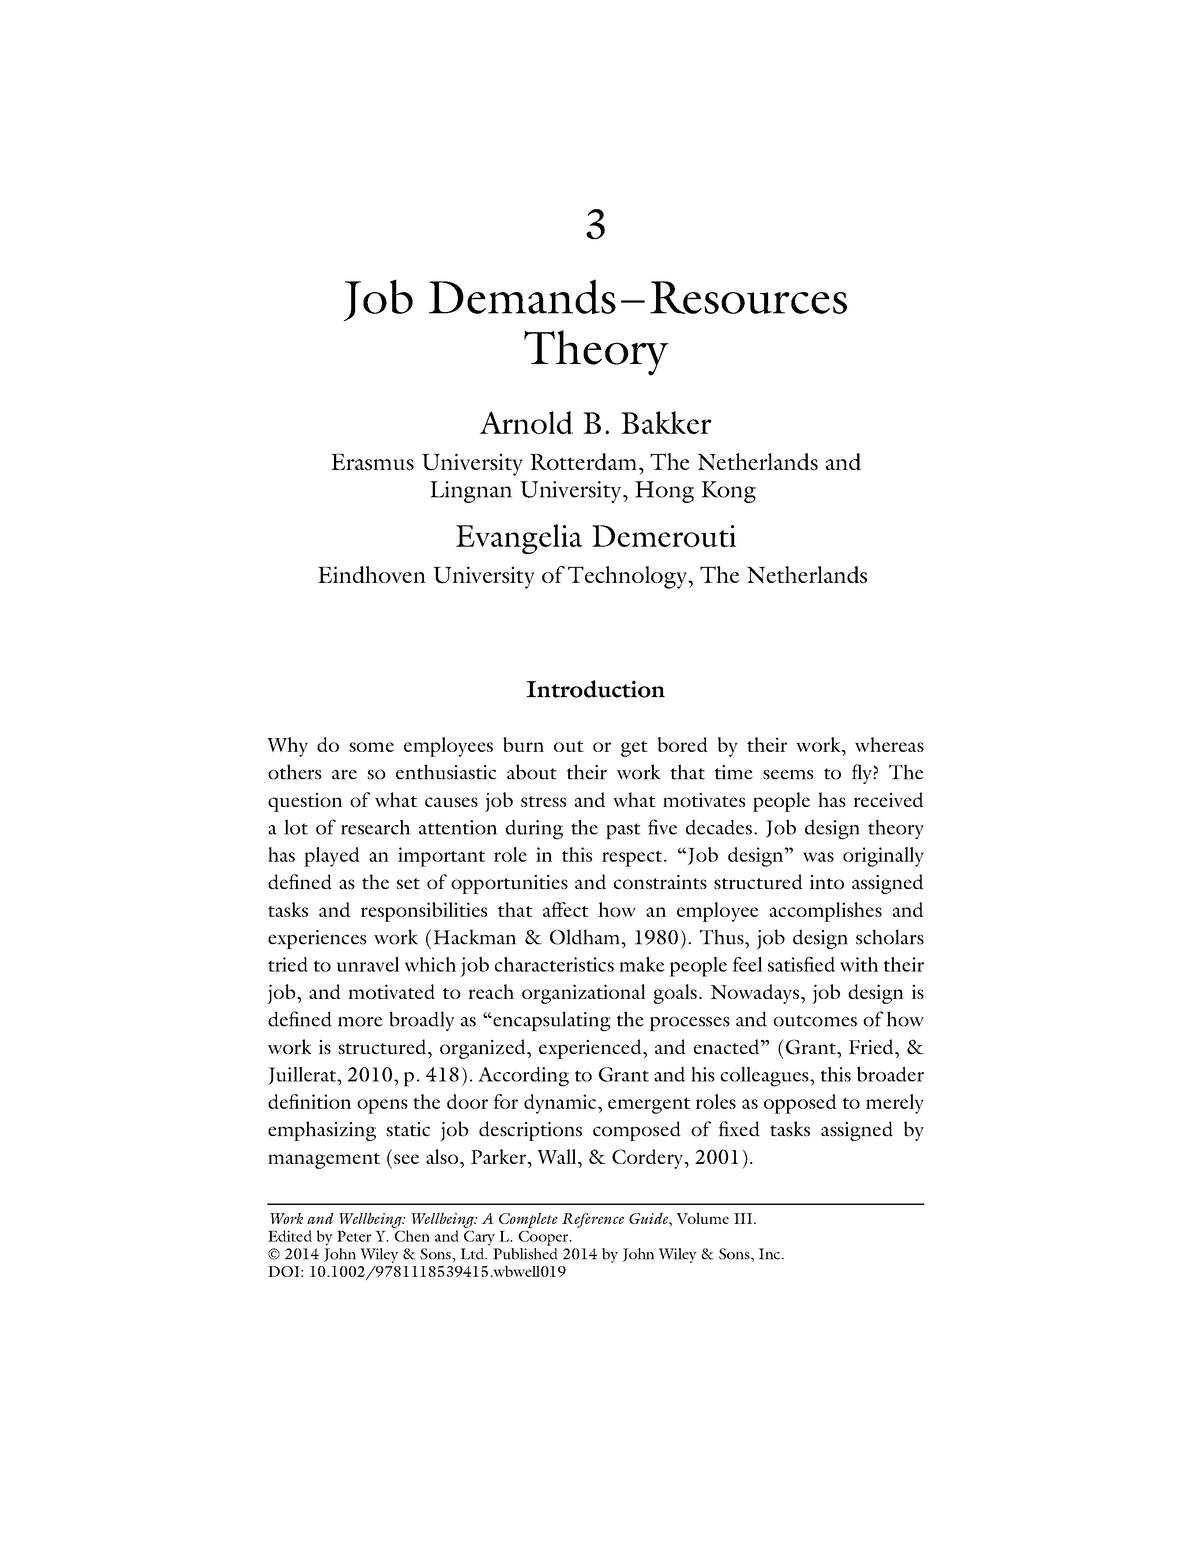 thesis on job demands